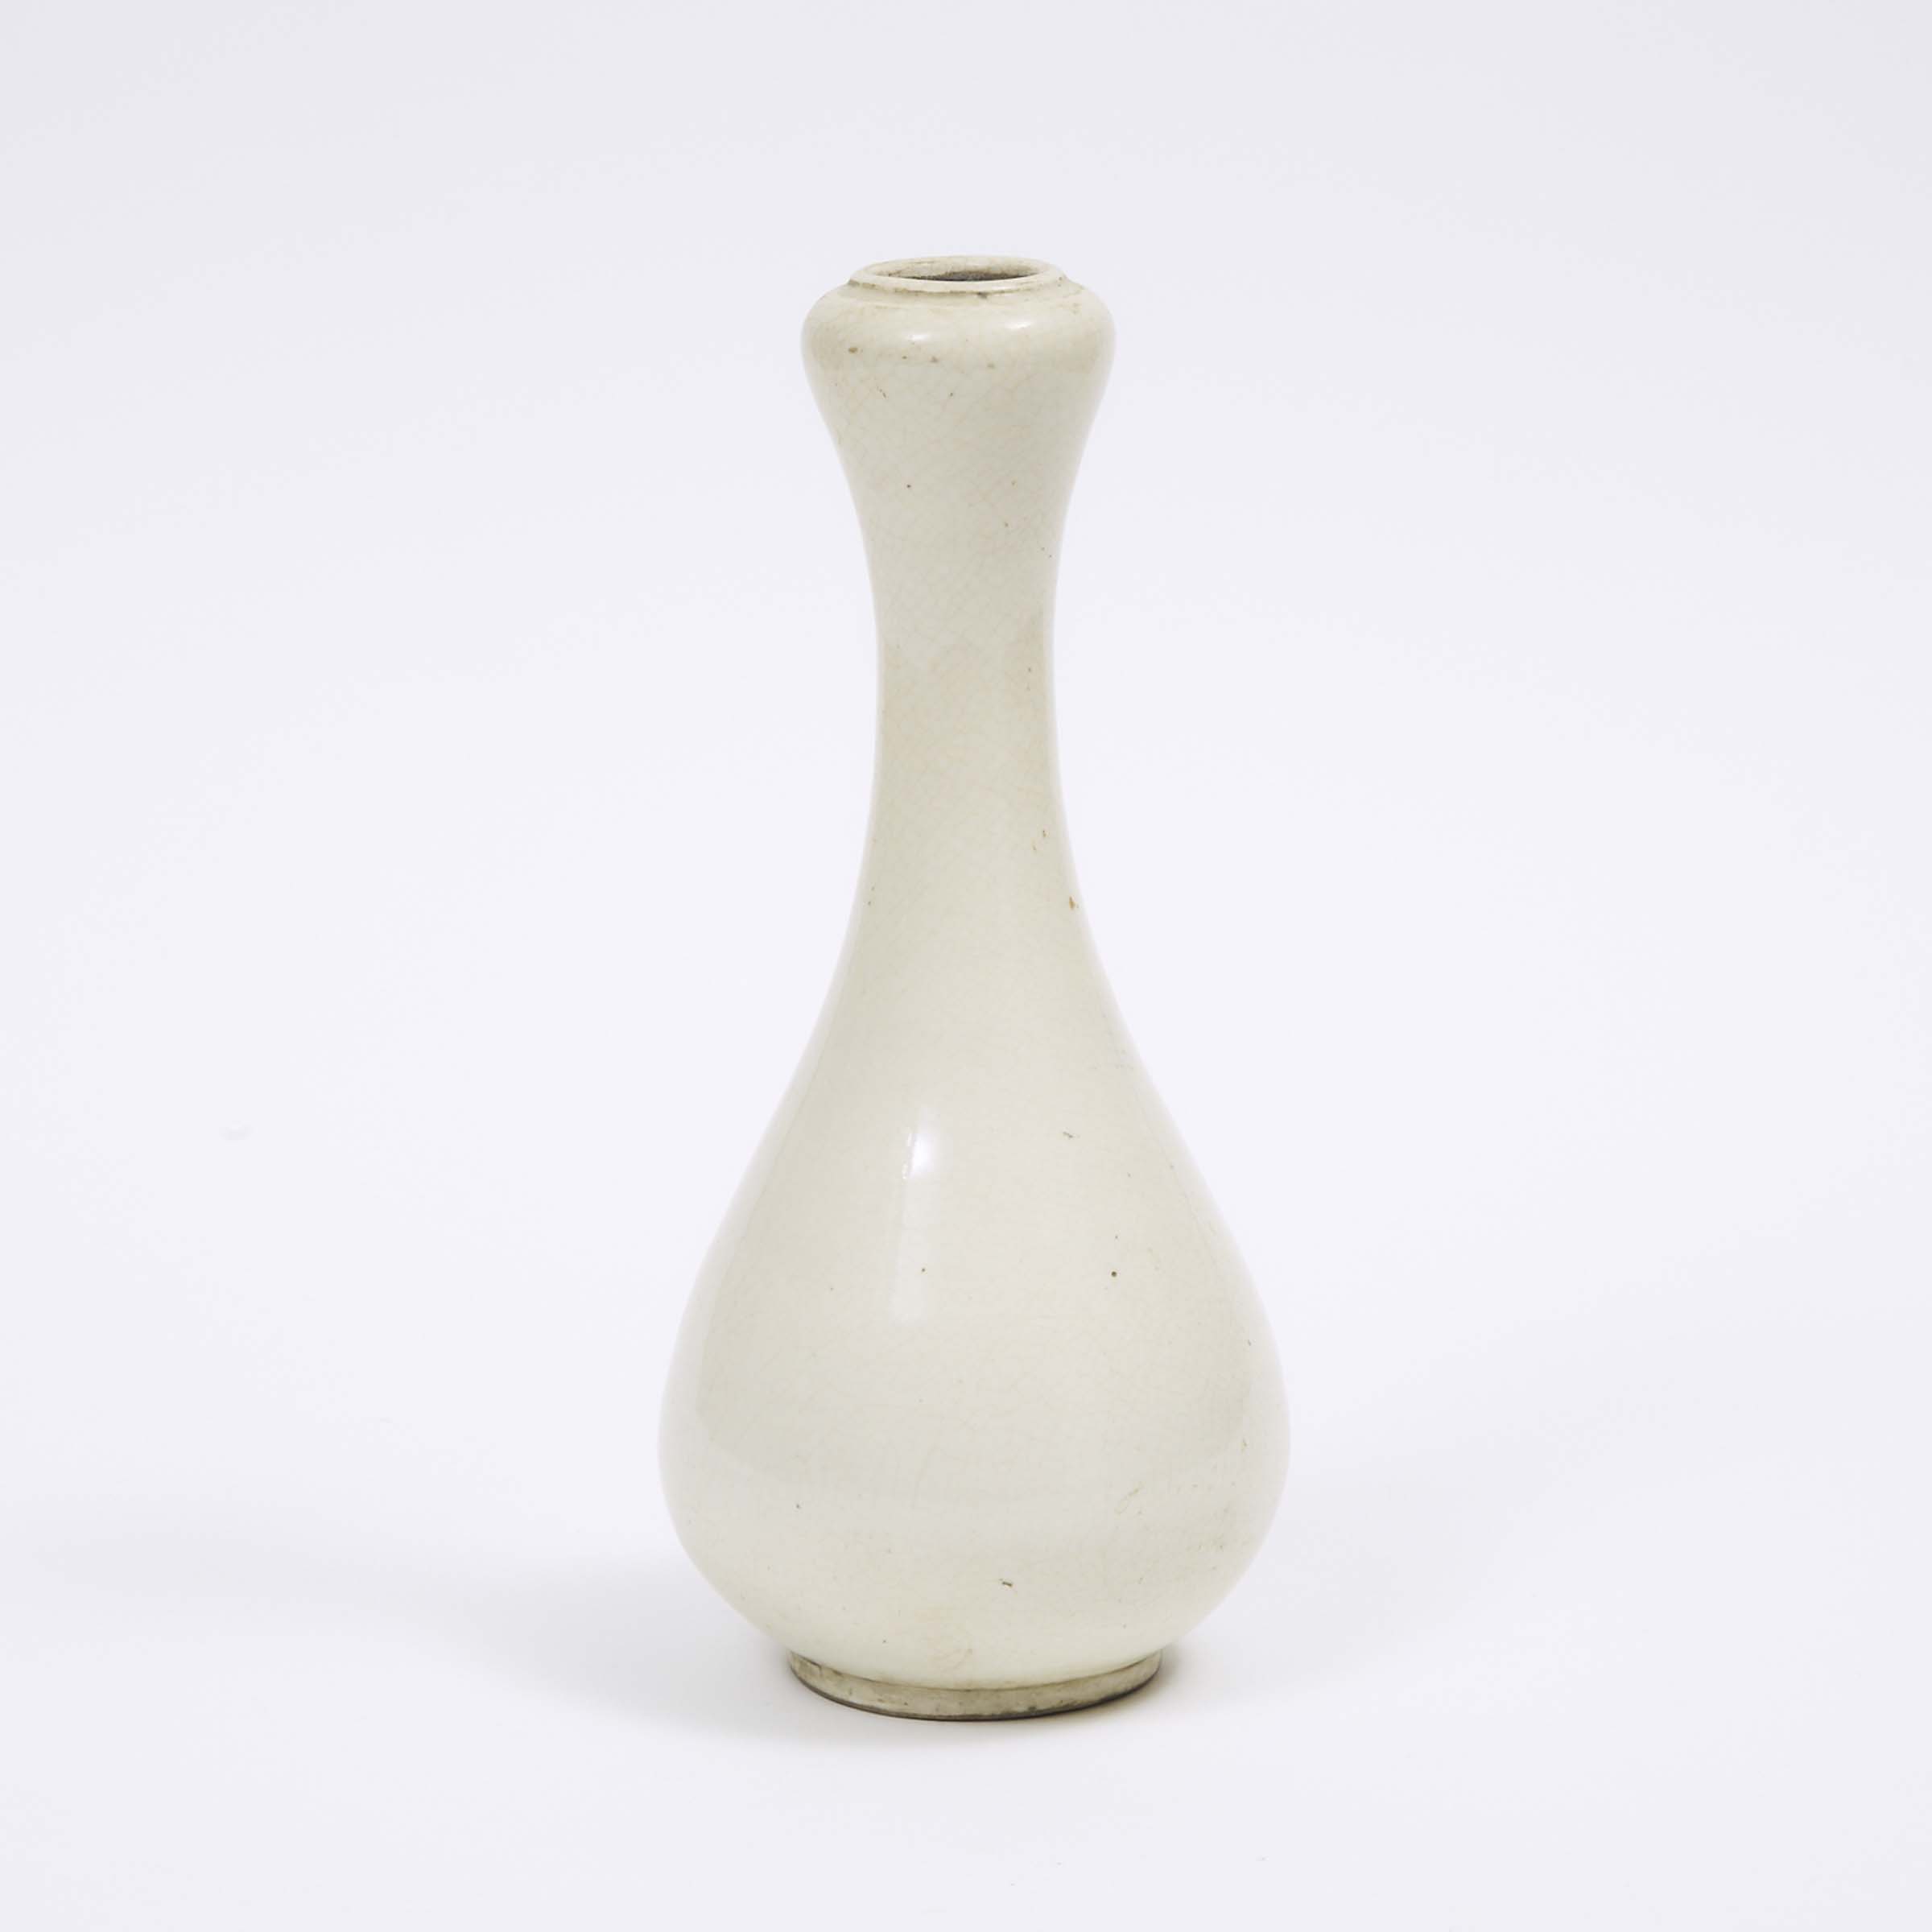 A White-Glazed 'Garlic-Head' Bottle Vase, 19th/20th Century